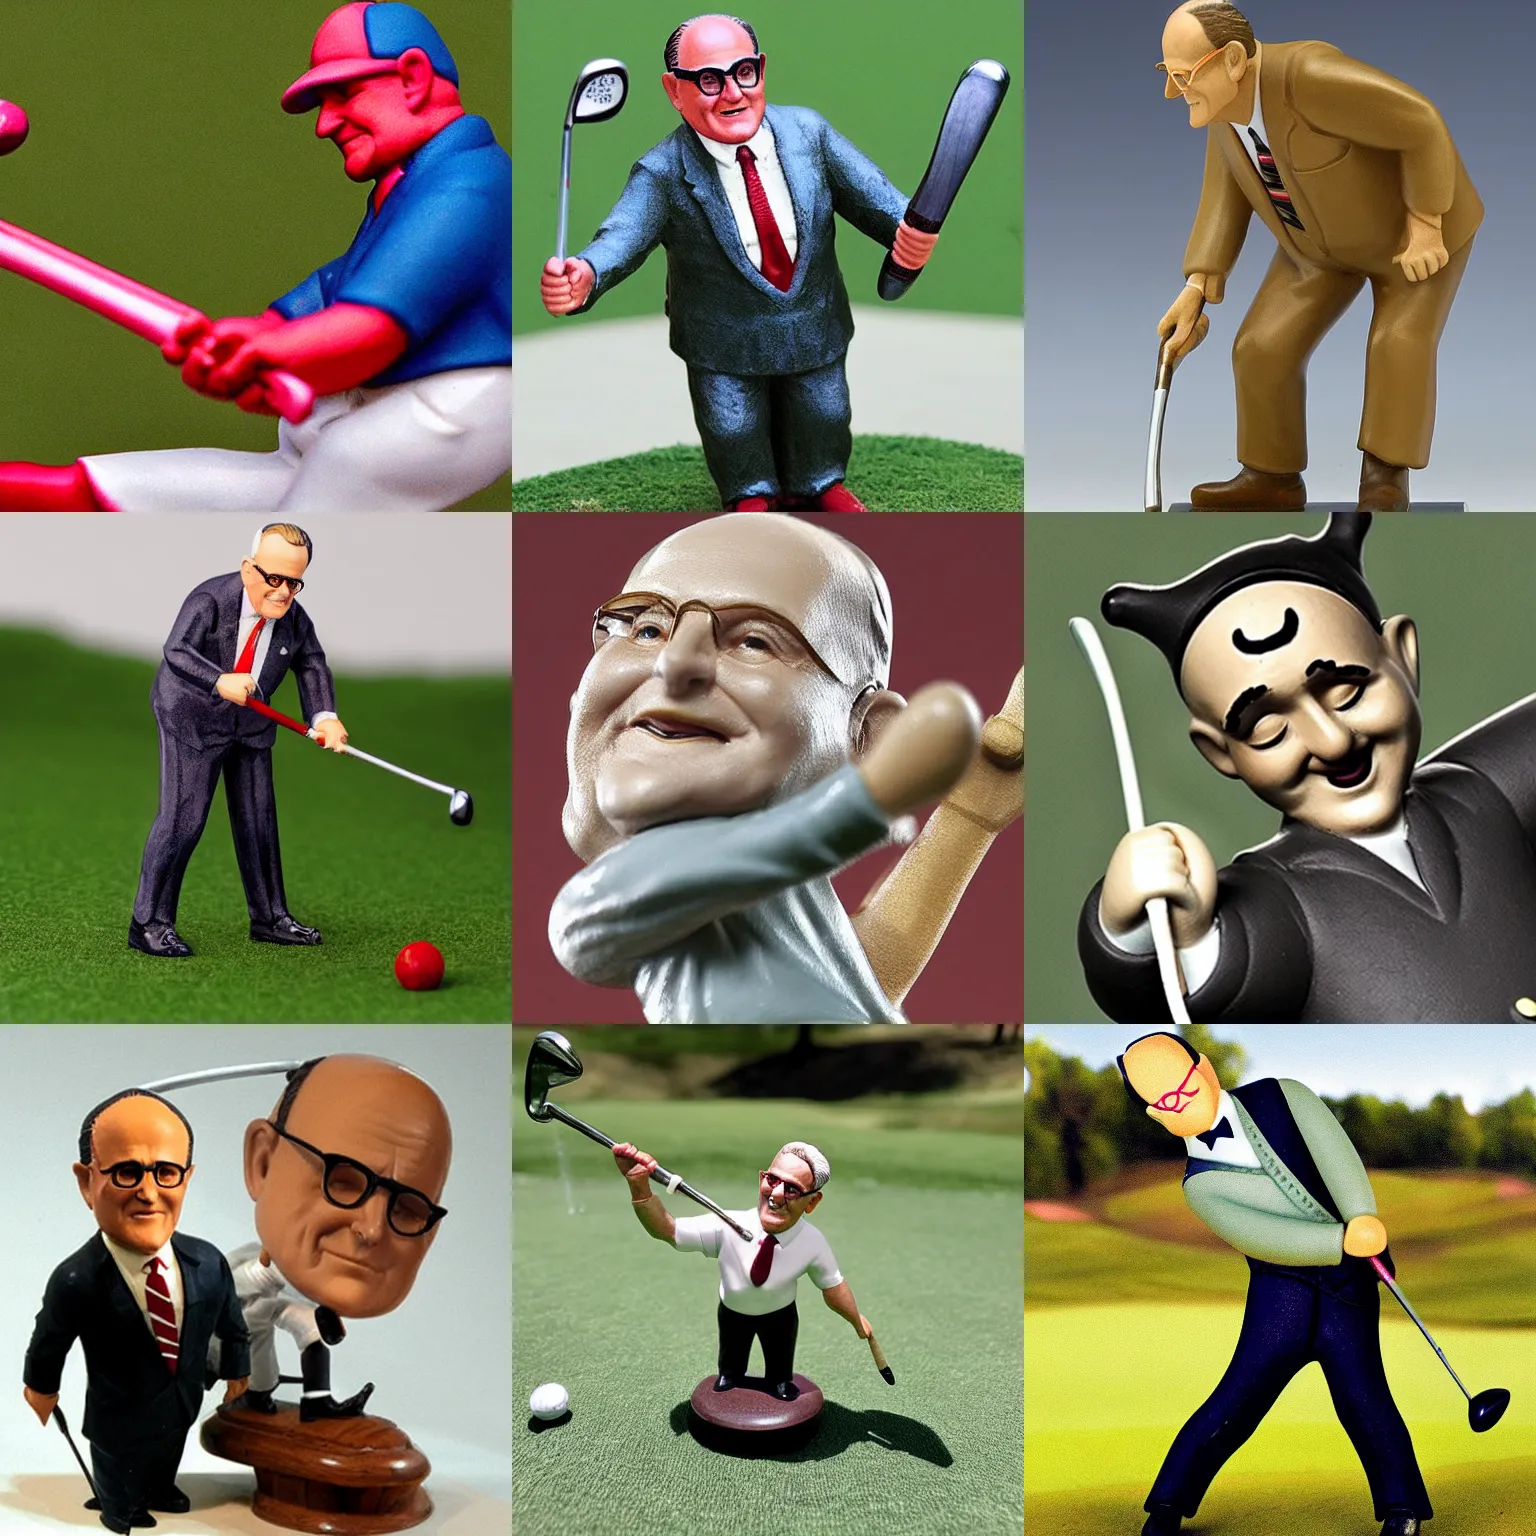 Prompt: hummel figurine of rudy giuliani swinging a golf club